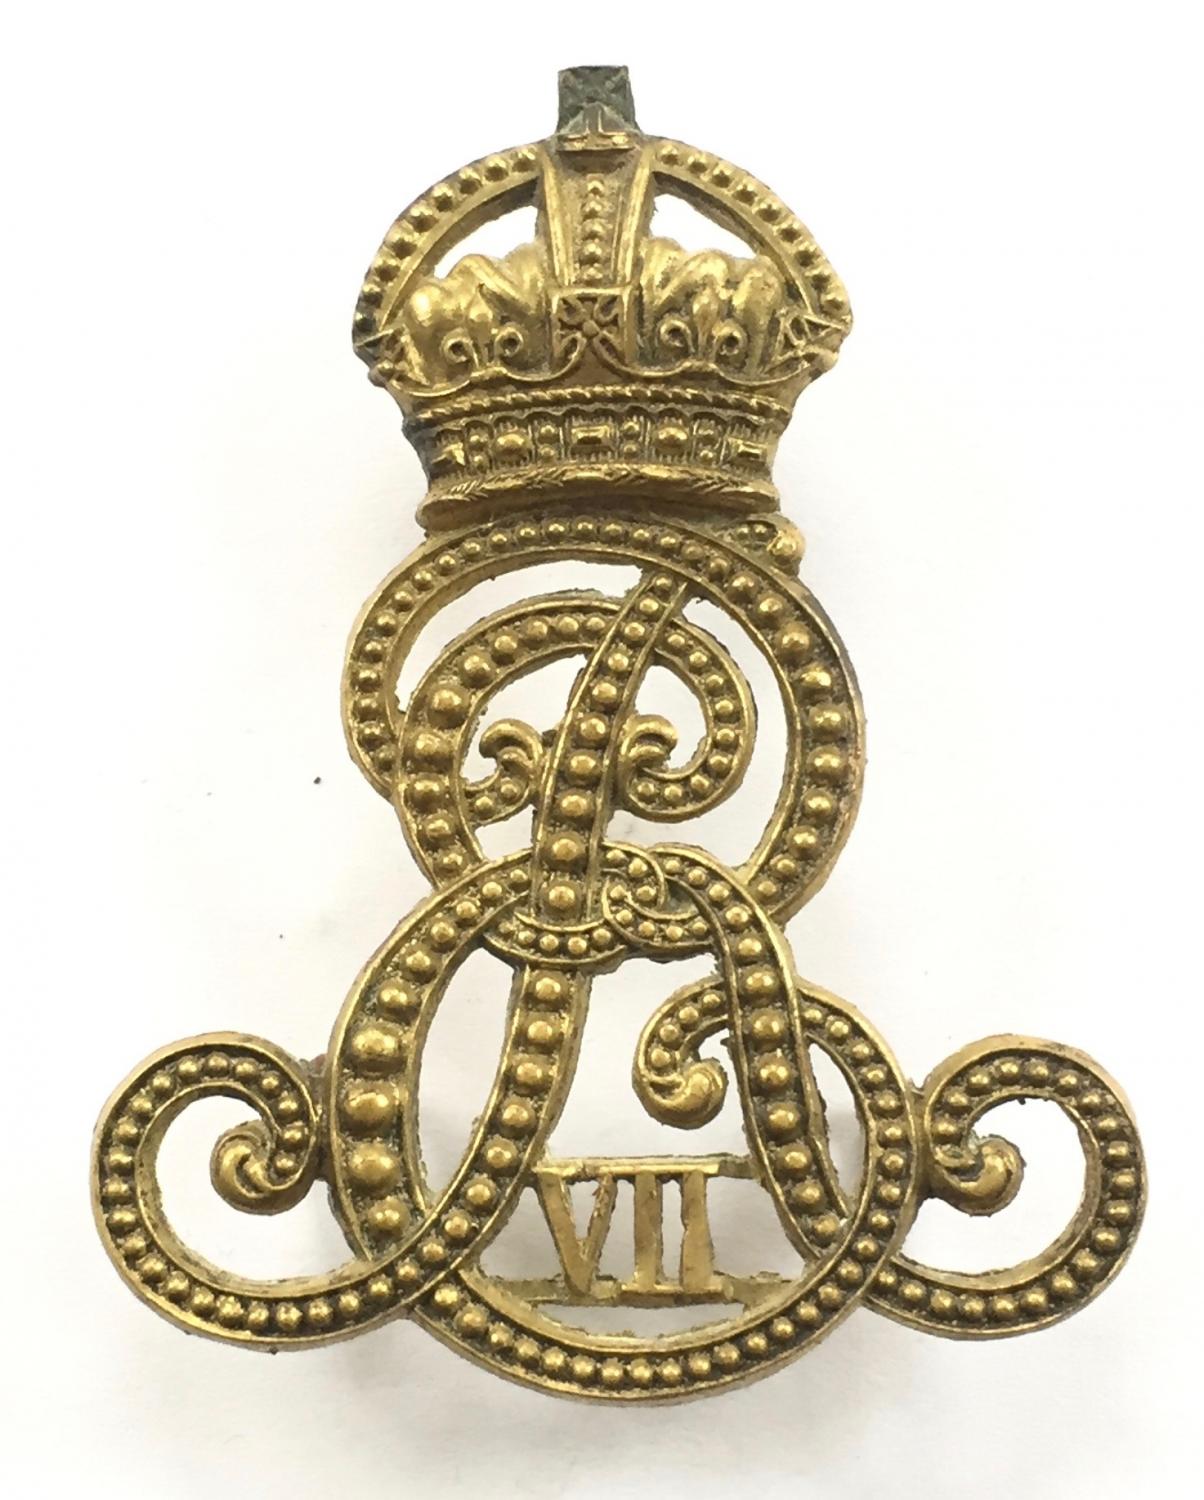 Norfolk Imperial Yeomanry Ed VII cap badge circa 1901-08